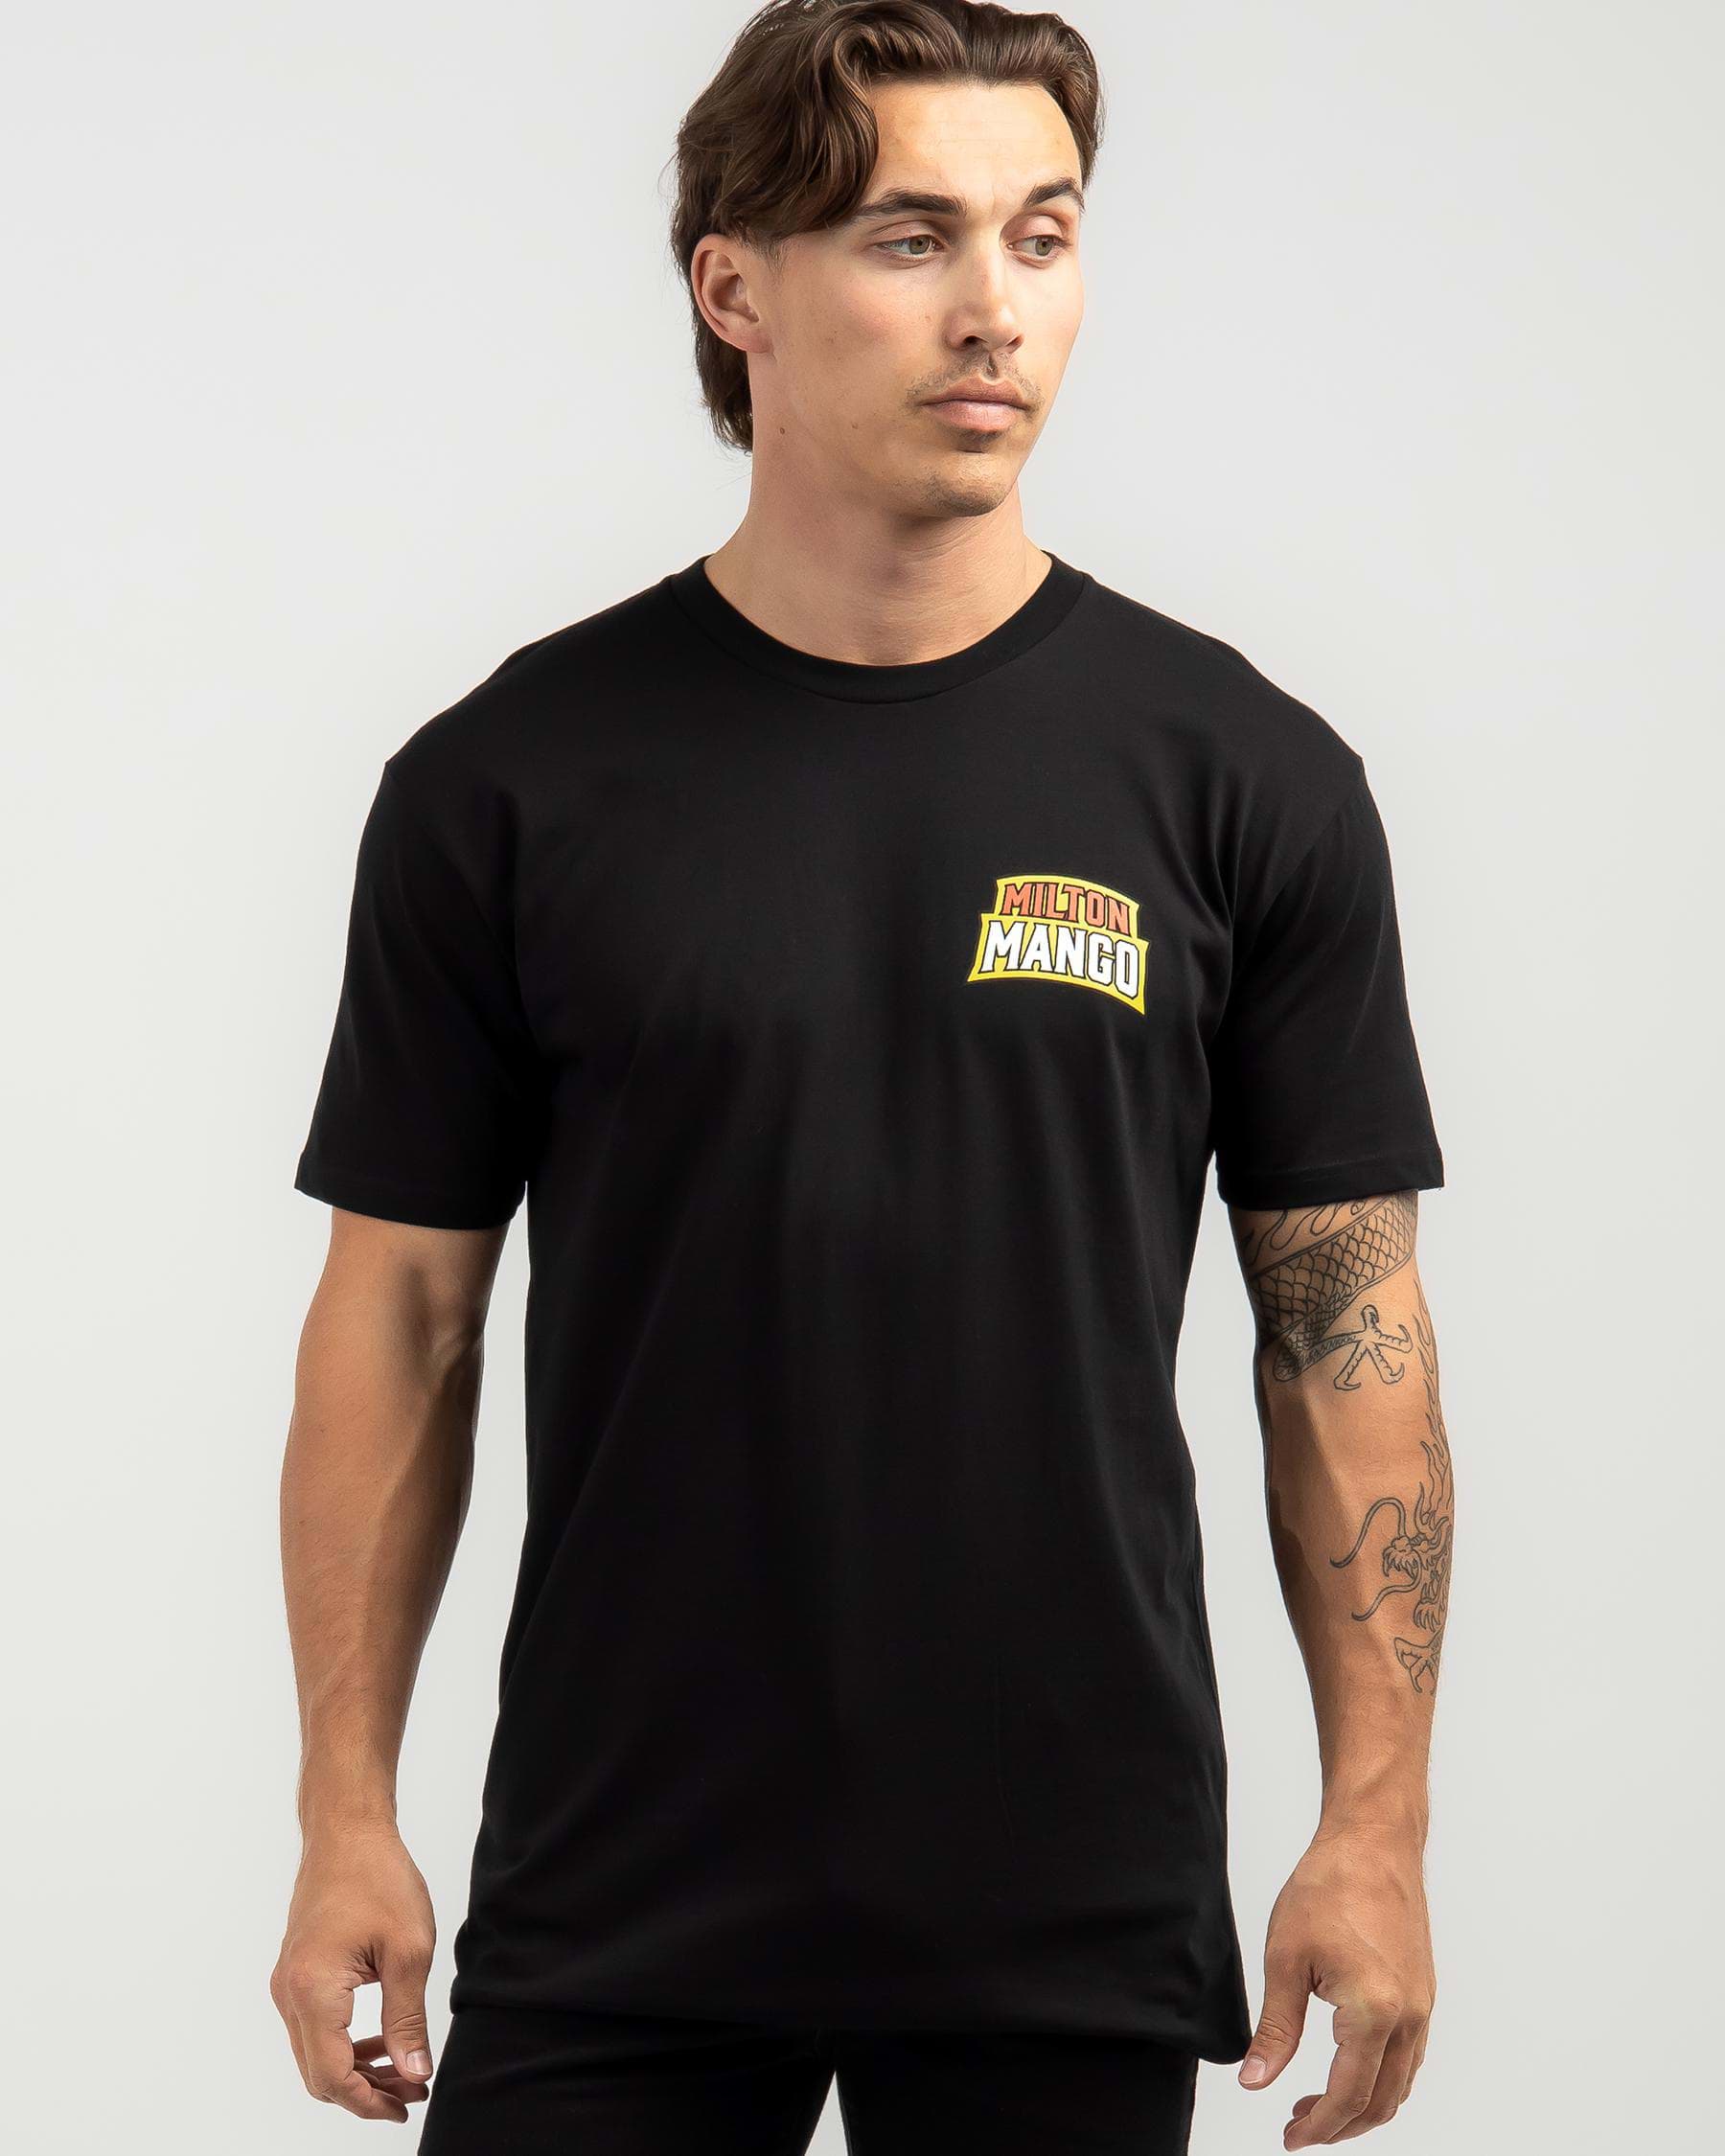 Milton Mango Sunshine State of Mind T-Shirt In Black - Fast Shipping ...